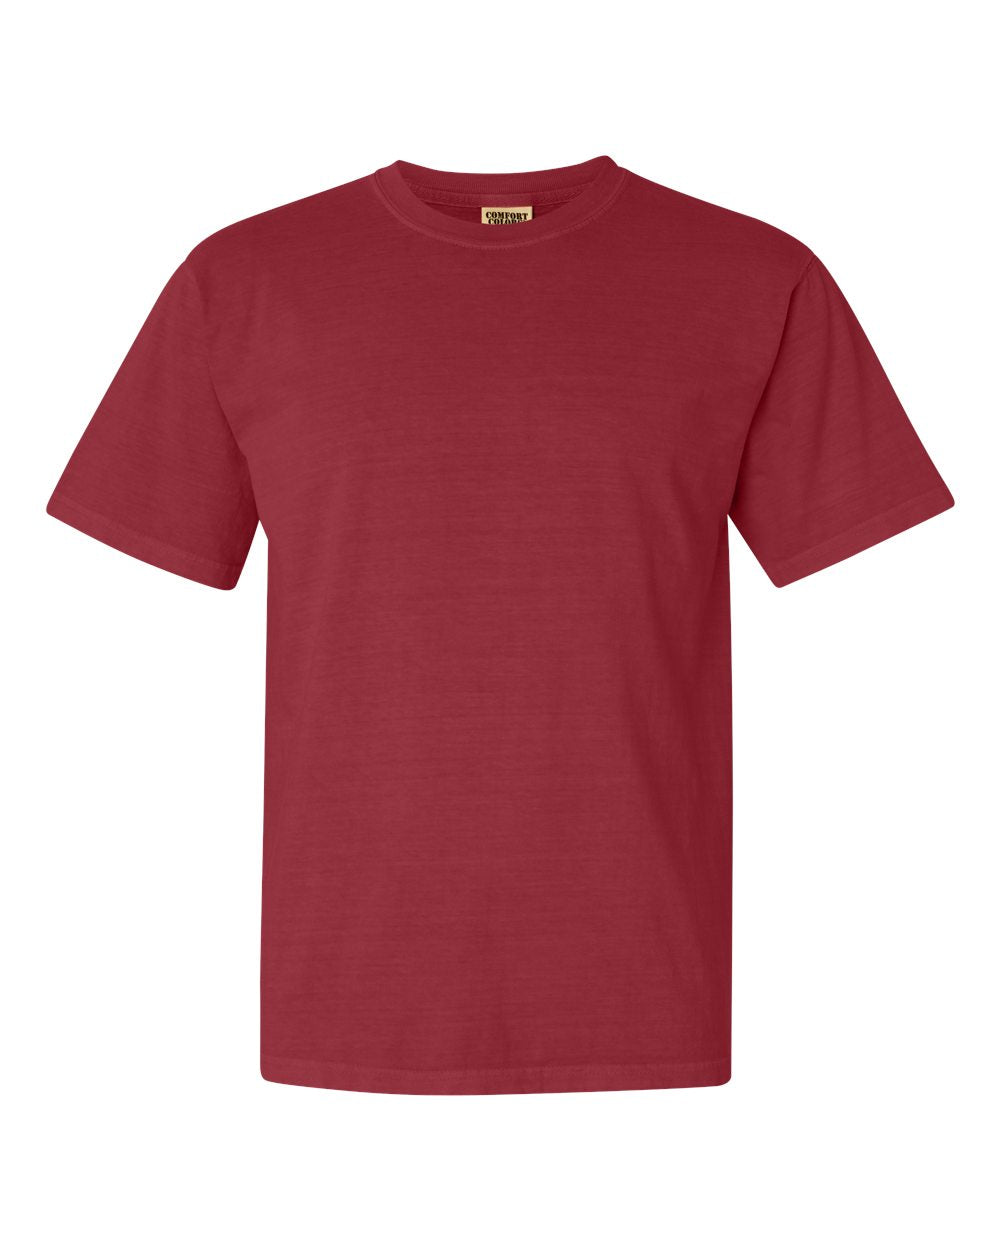 Comfort Colors - Garment-Dyed Heavyweight T-Shirt 1717